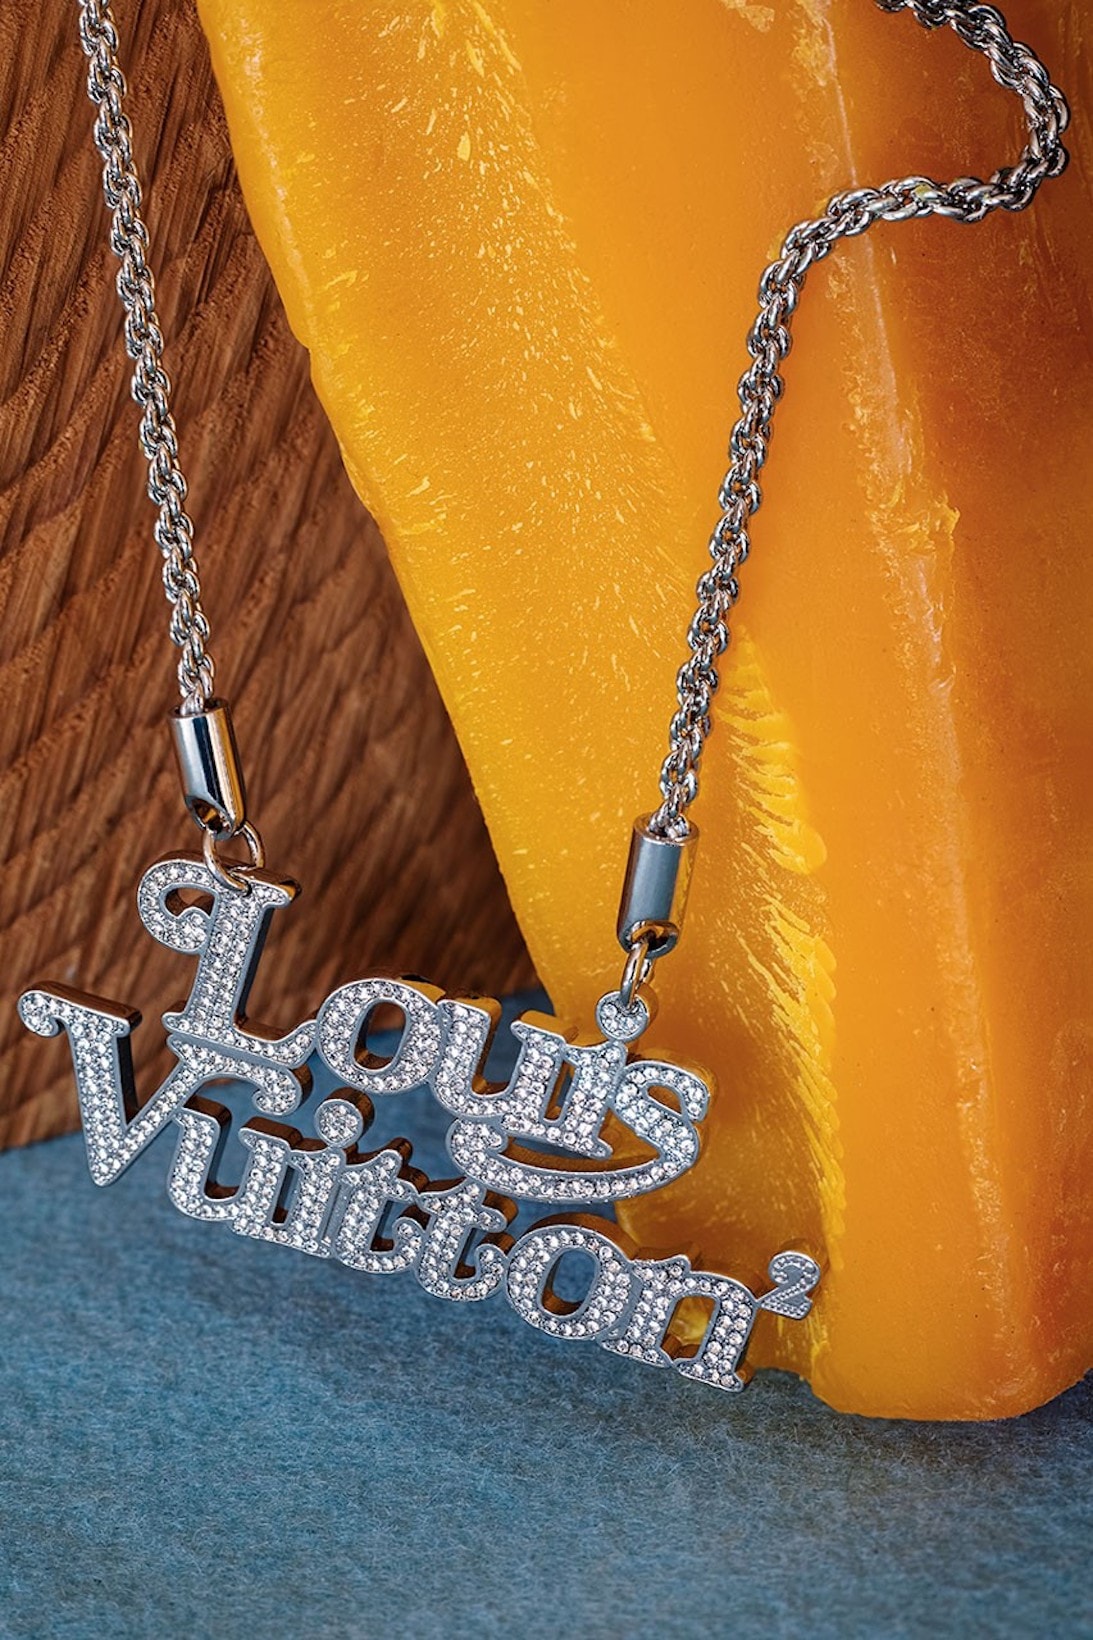 Purse Bling Blog Tagged Louis Vuitton Tote Bag